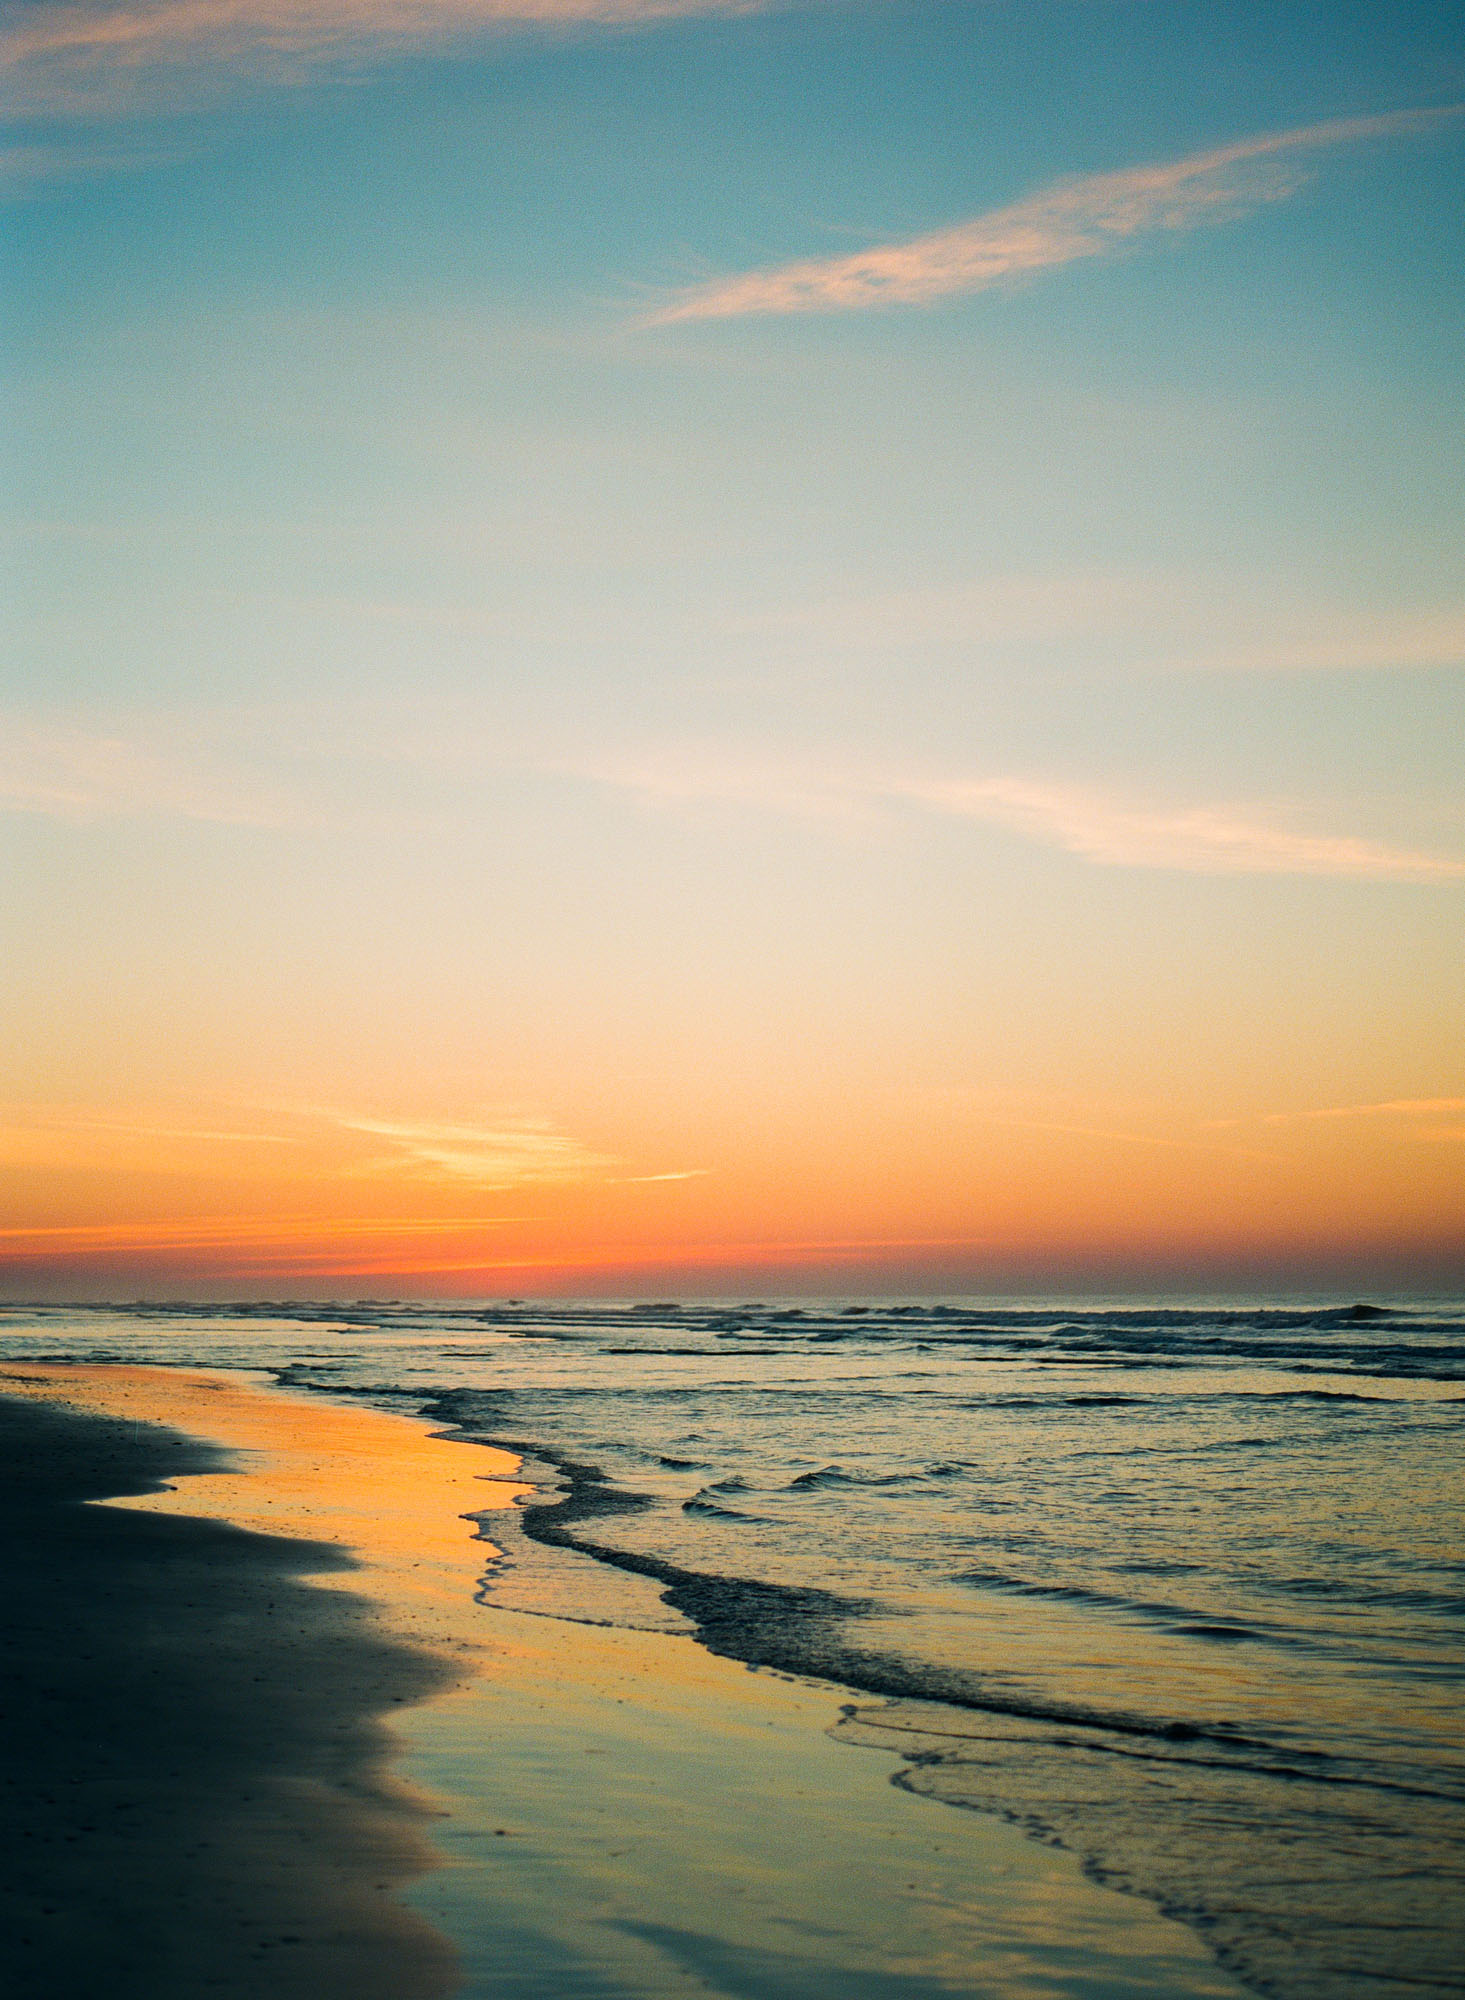 folly-beach-sunrise-charleston-film-photography-35mm-film-analog-charleston-photographer-001